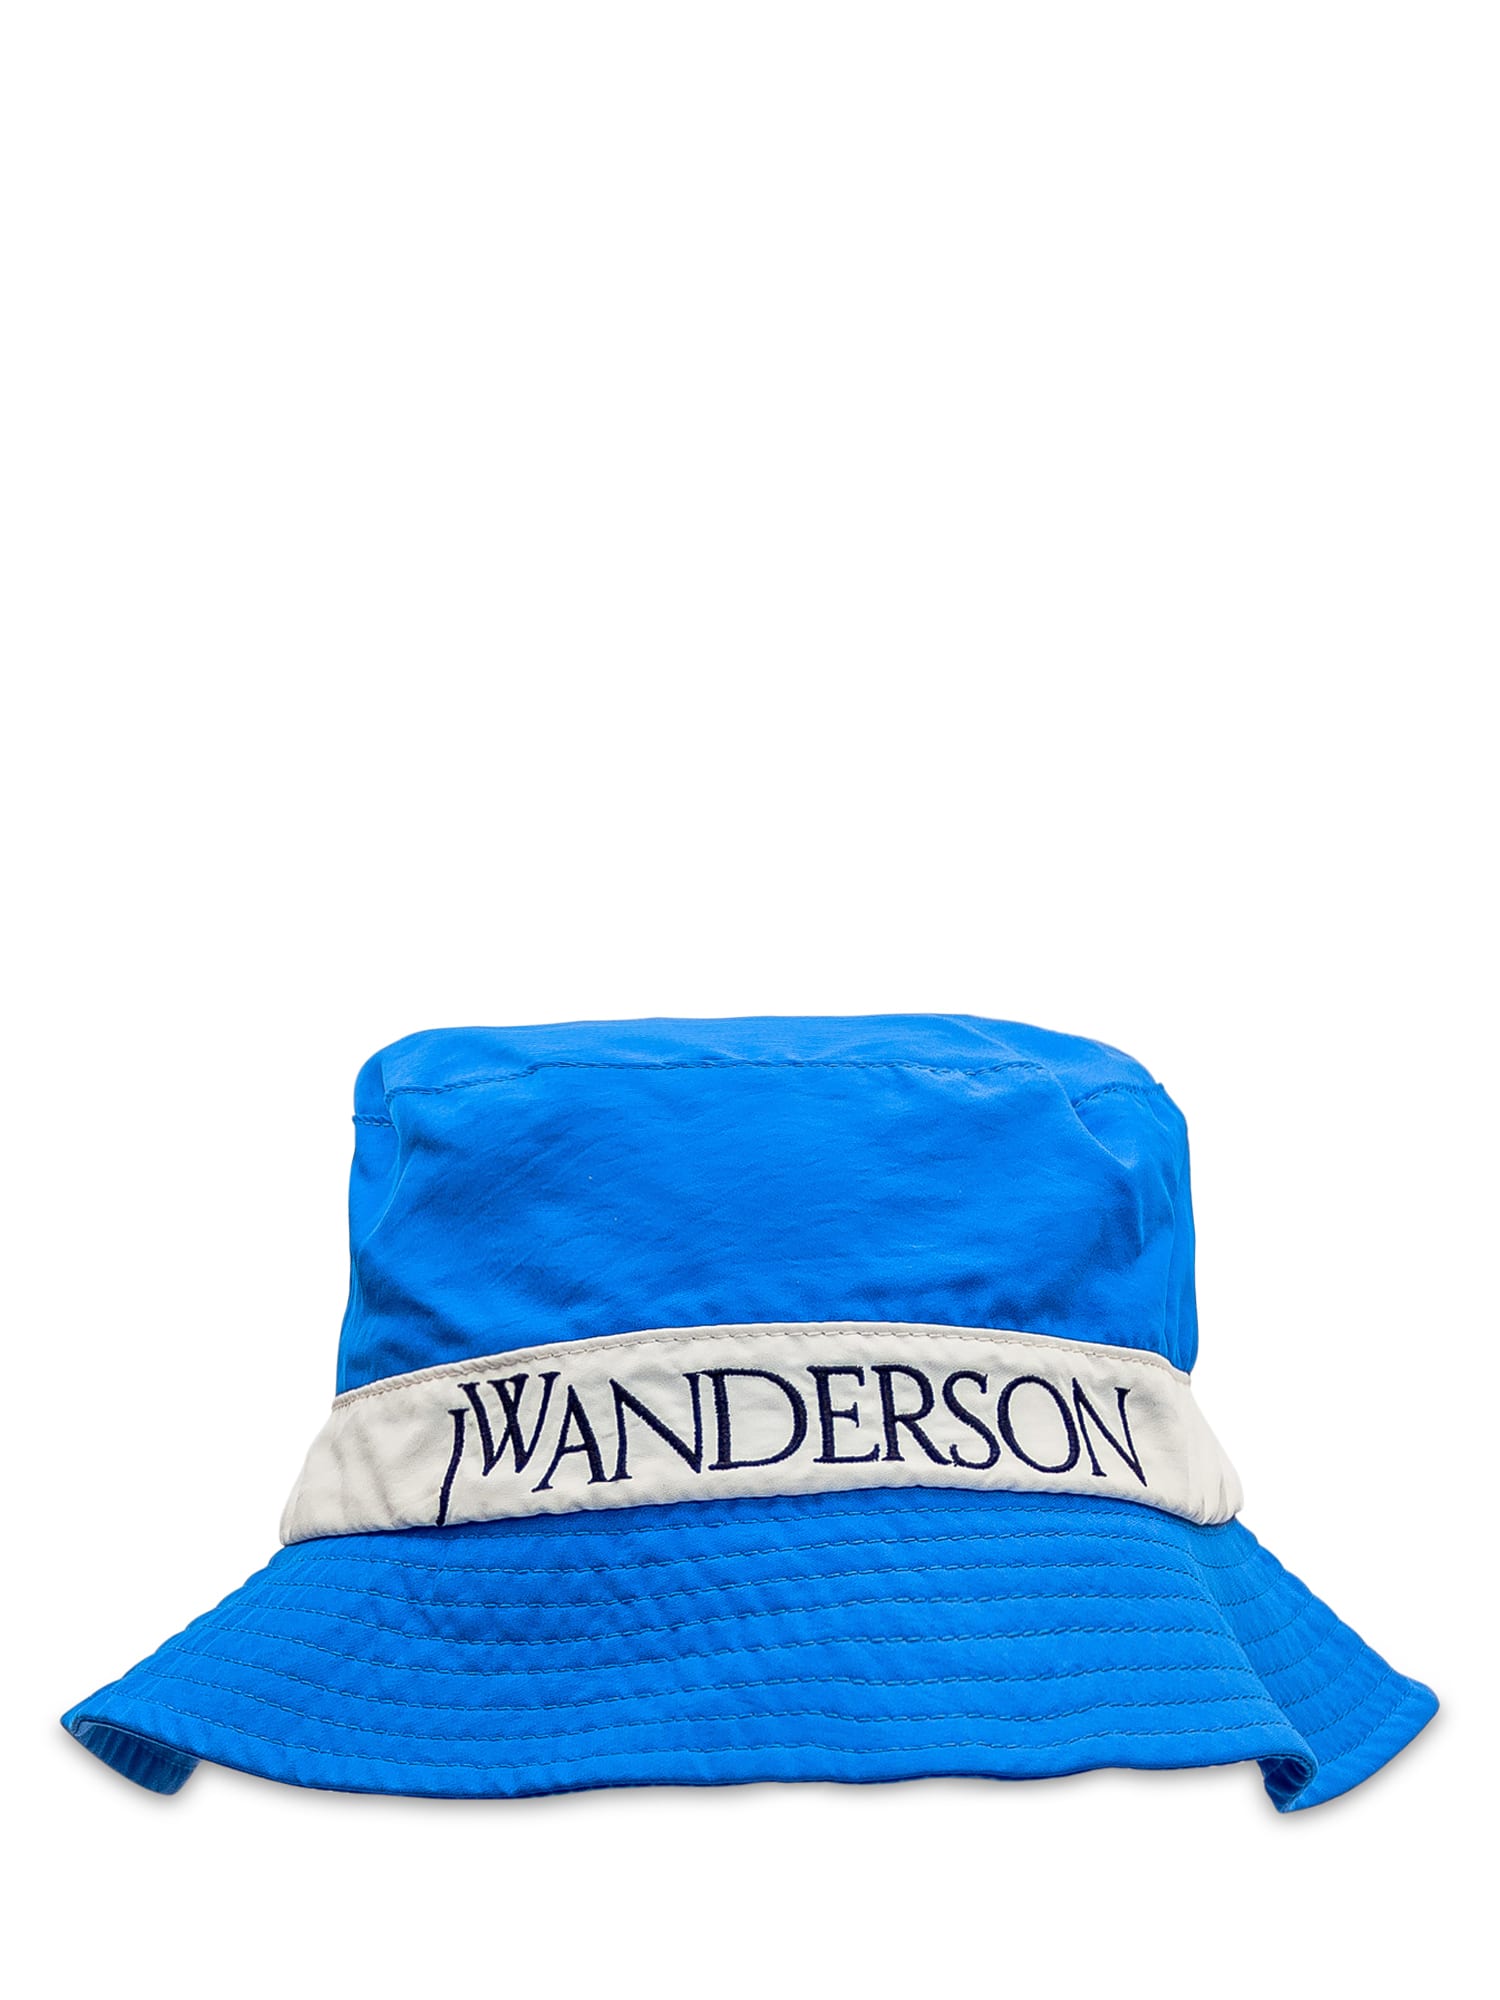 J.W. Anderson Logo Hat